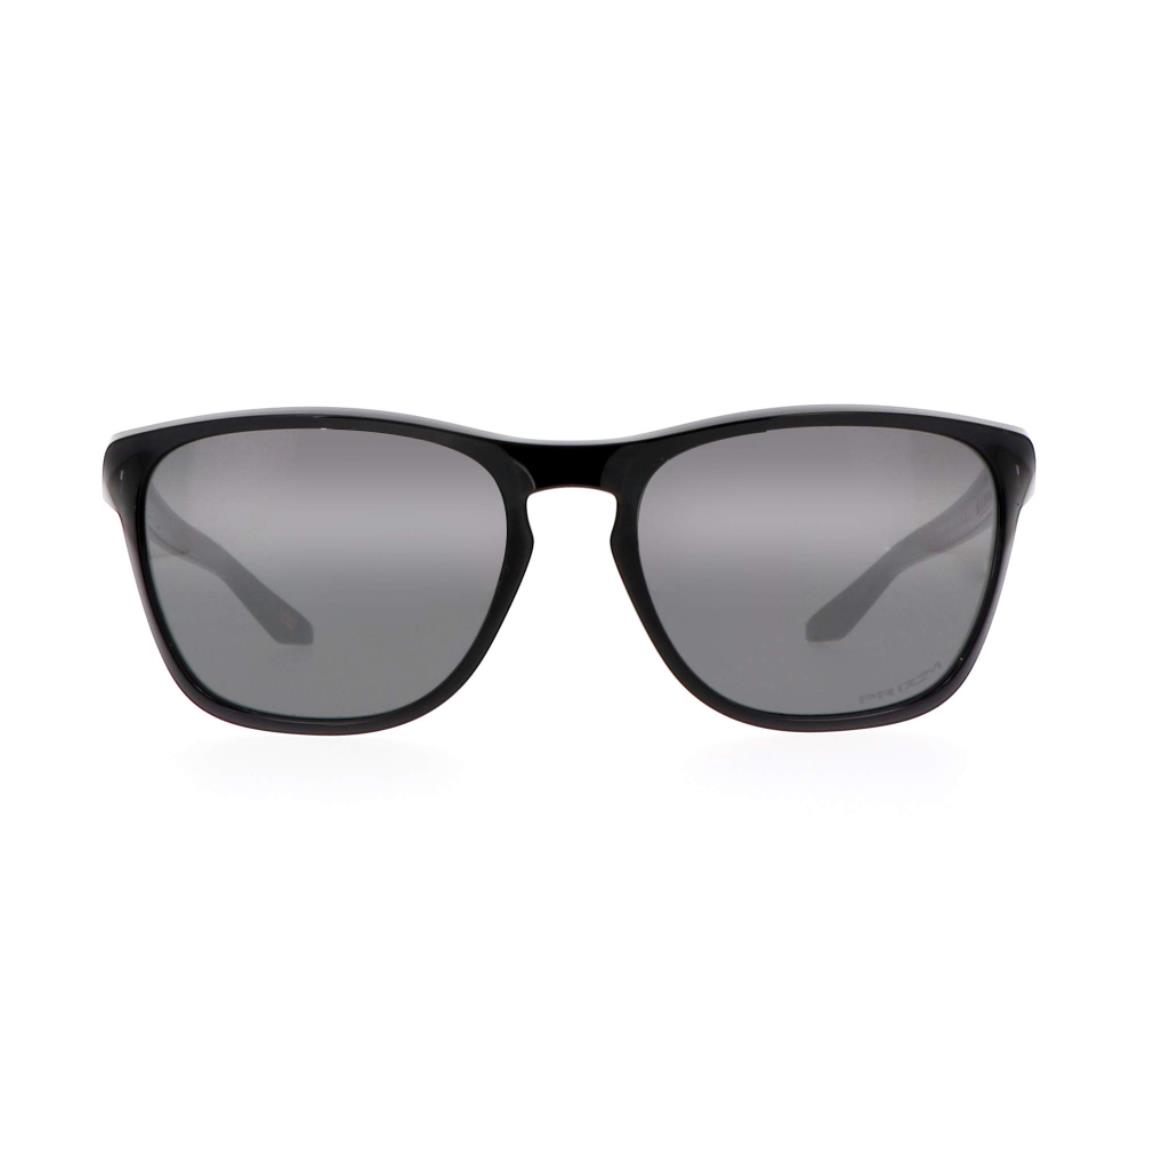 Oakley sunglasses Manorburn - Black Frame, Black Lens 0